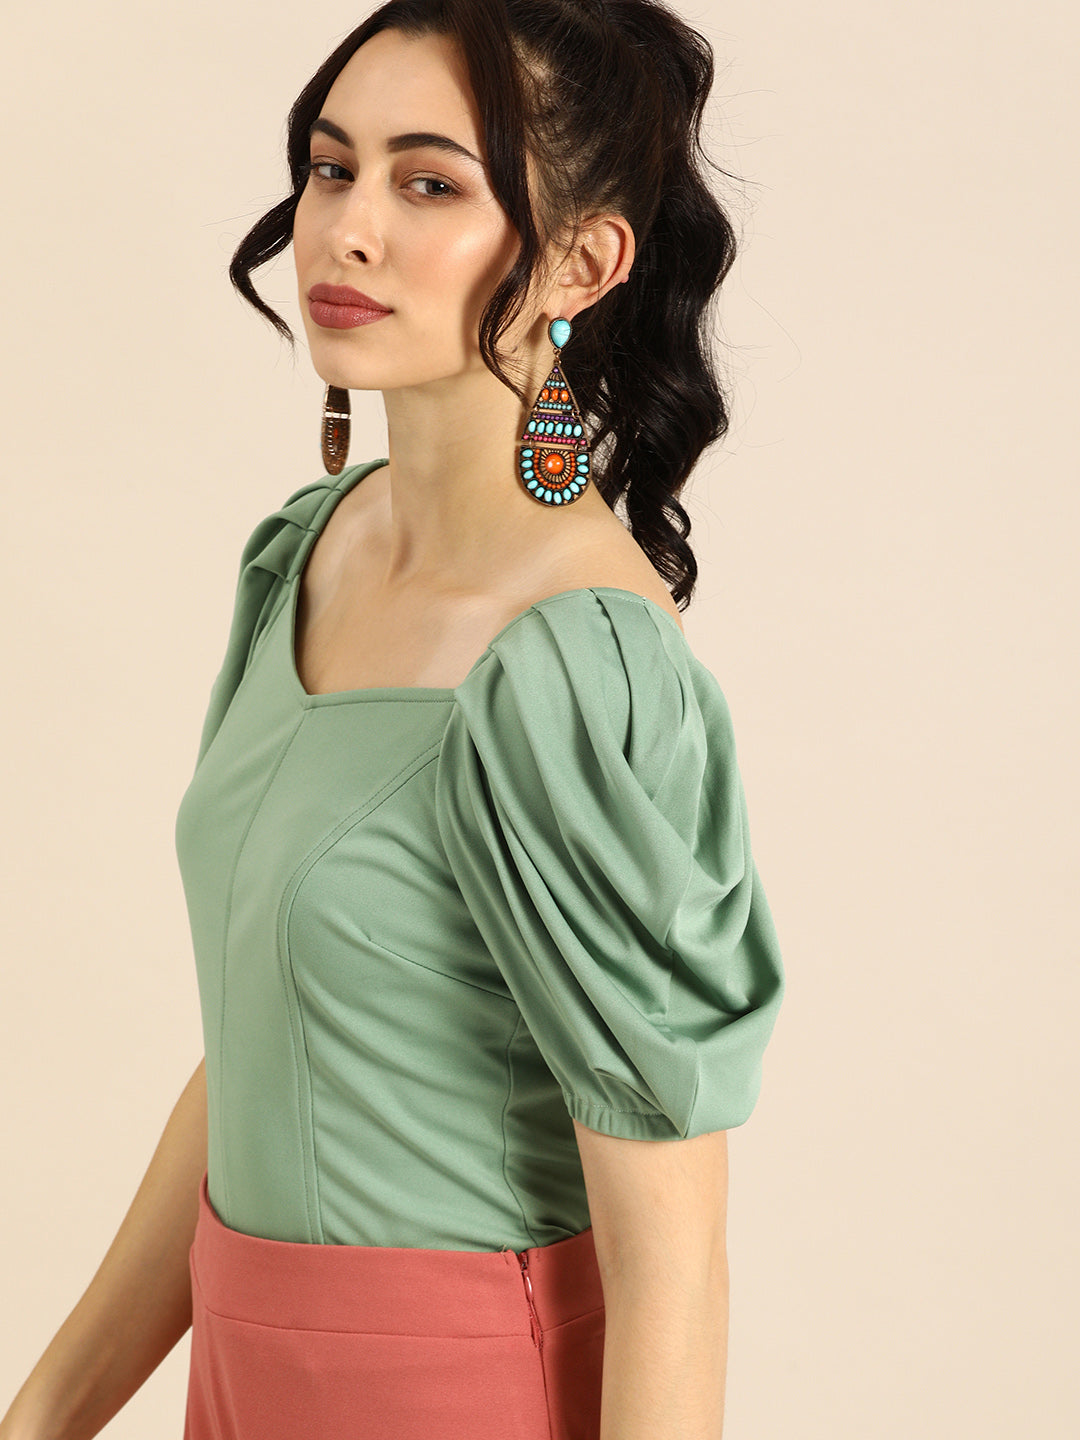 Athena Stylish Mint Green Power Shoulders Top - Athena Lifestyle